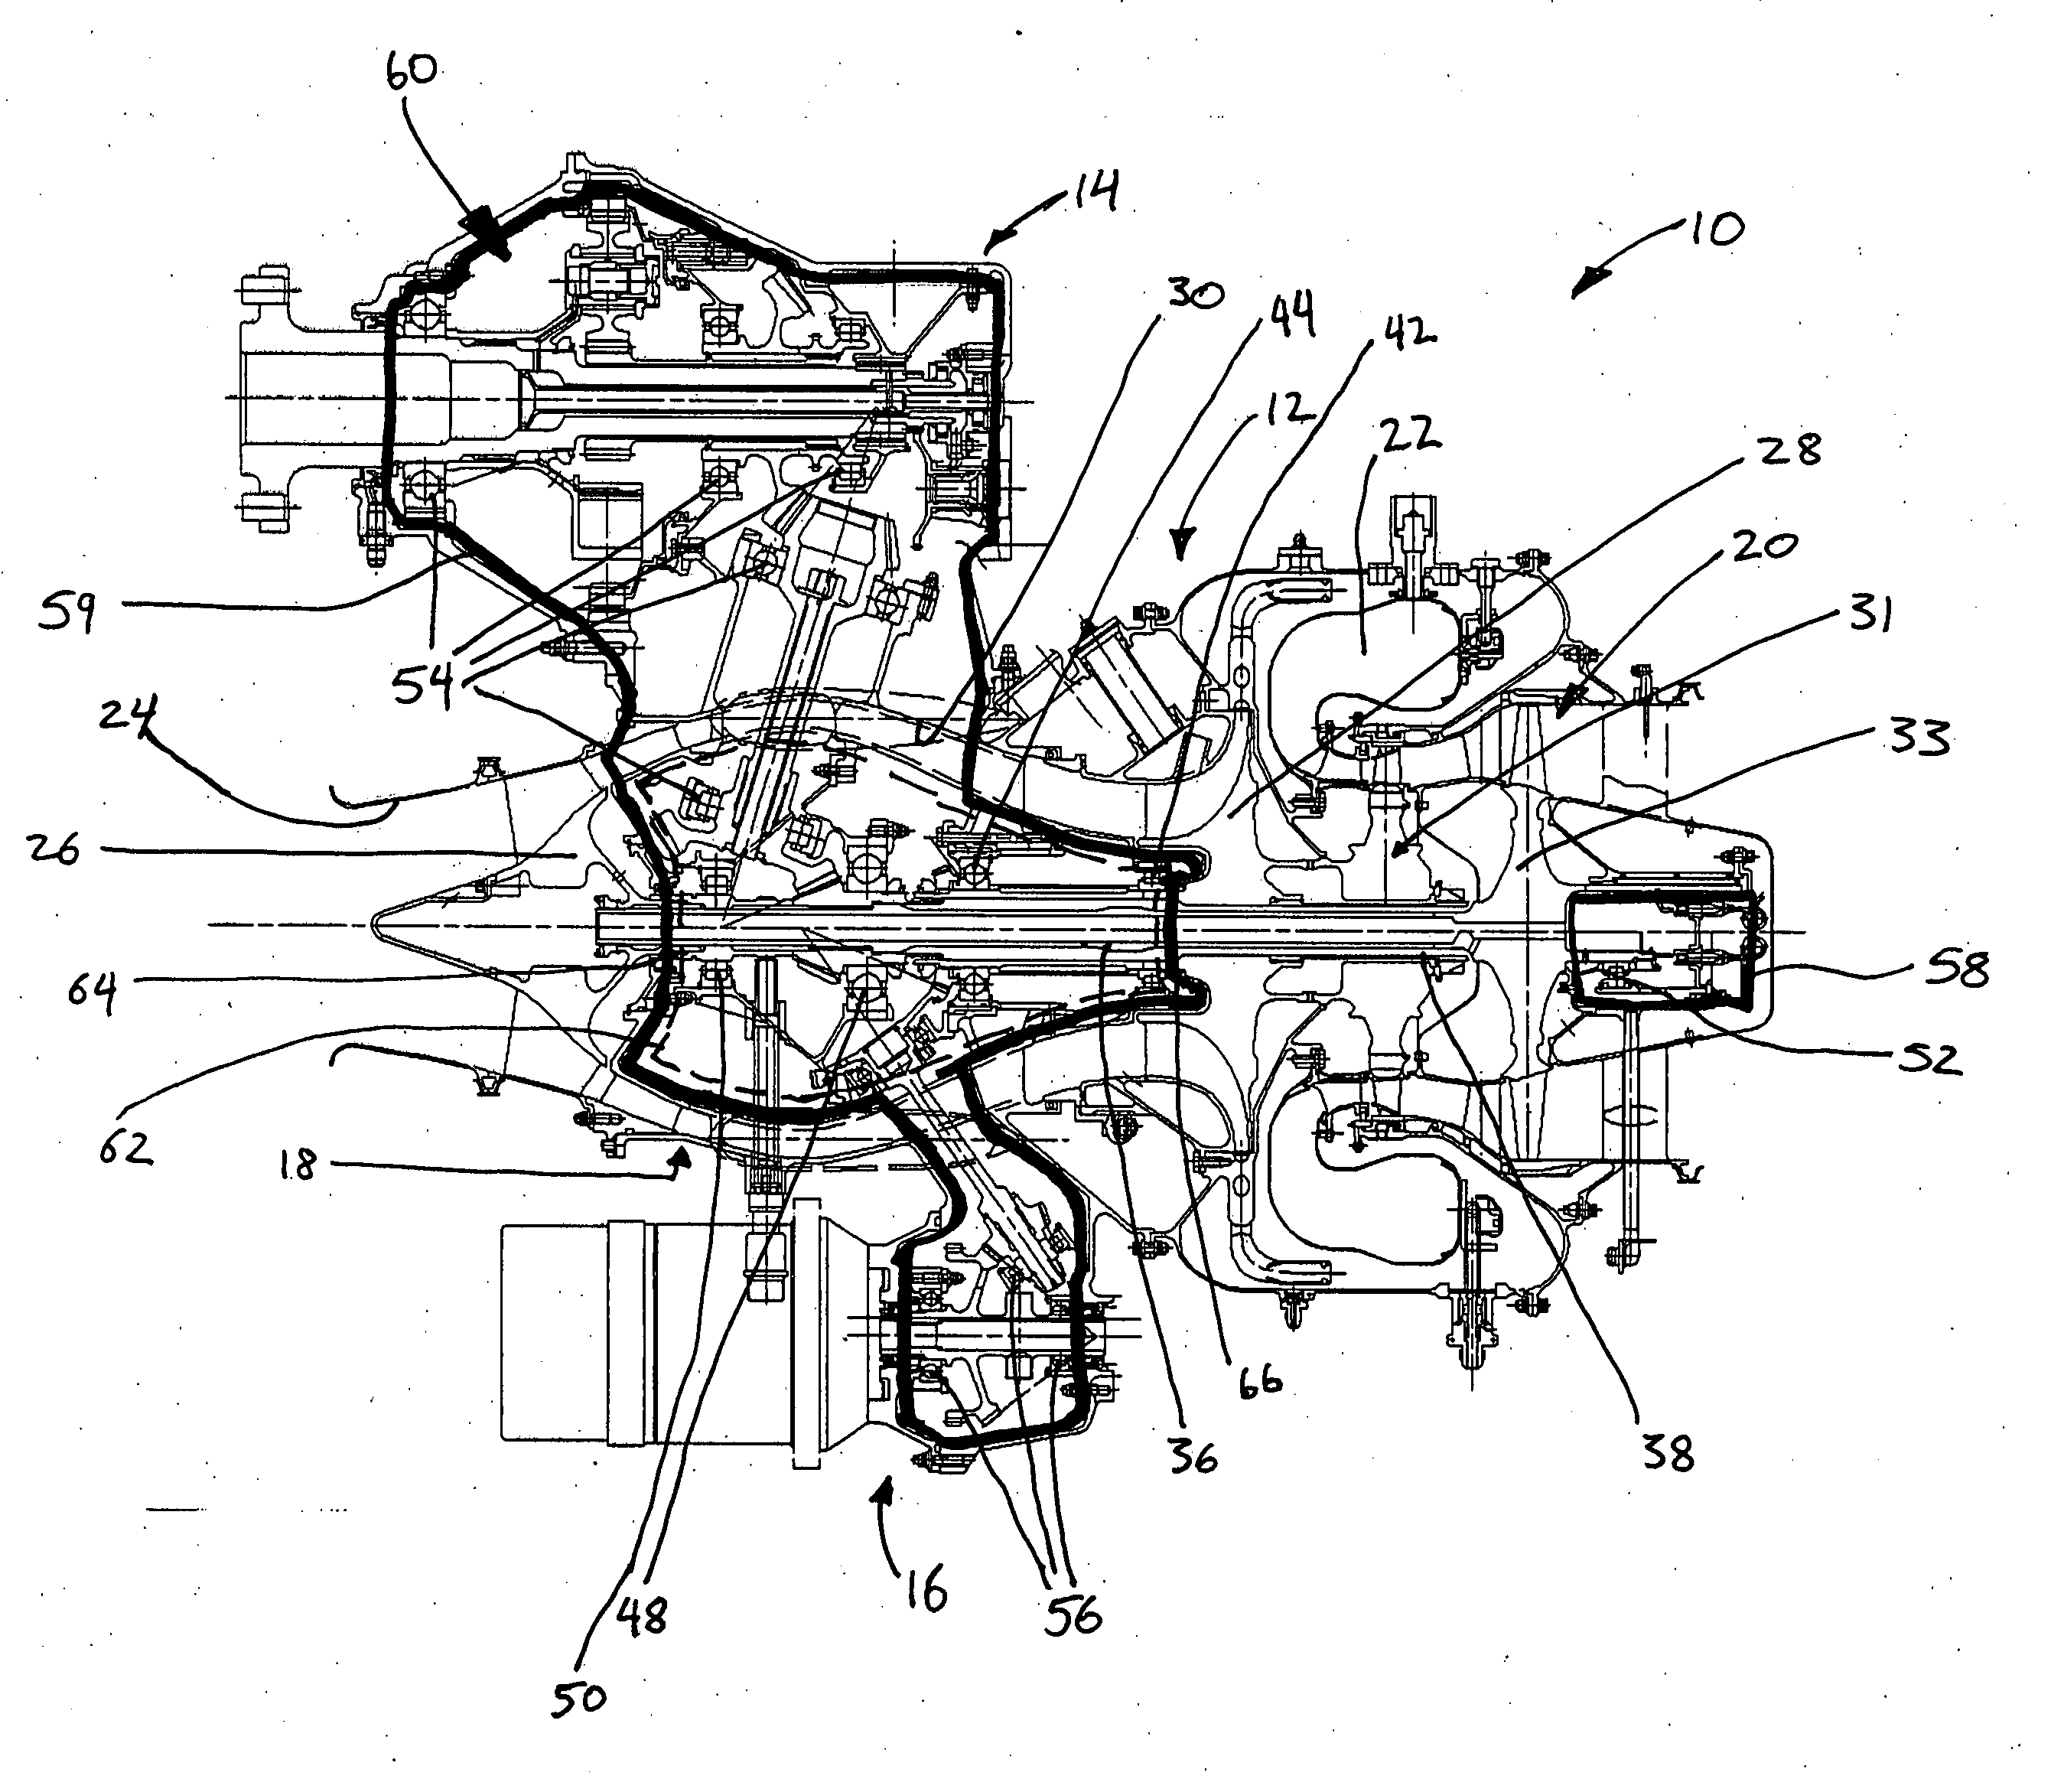 Gas turbine engine architecture